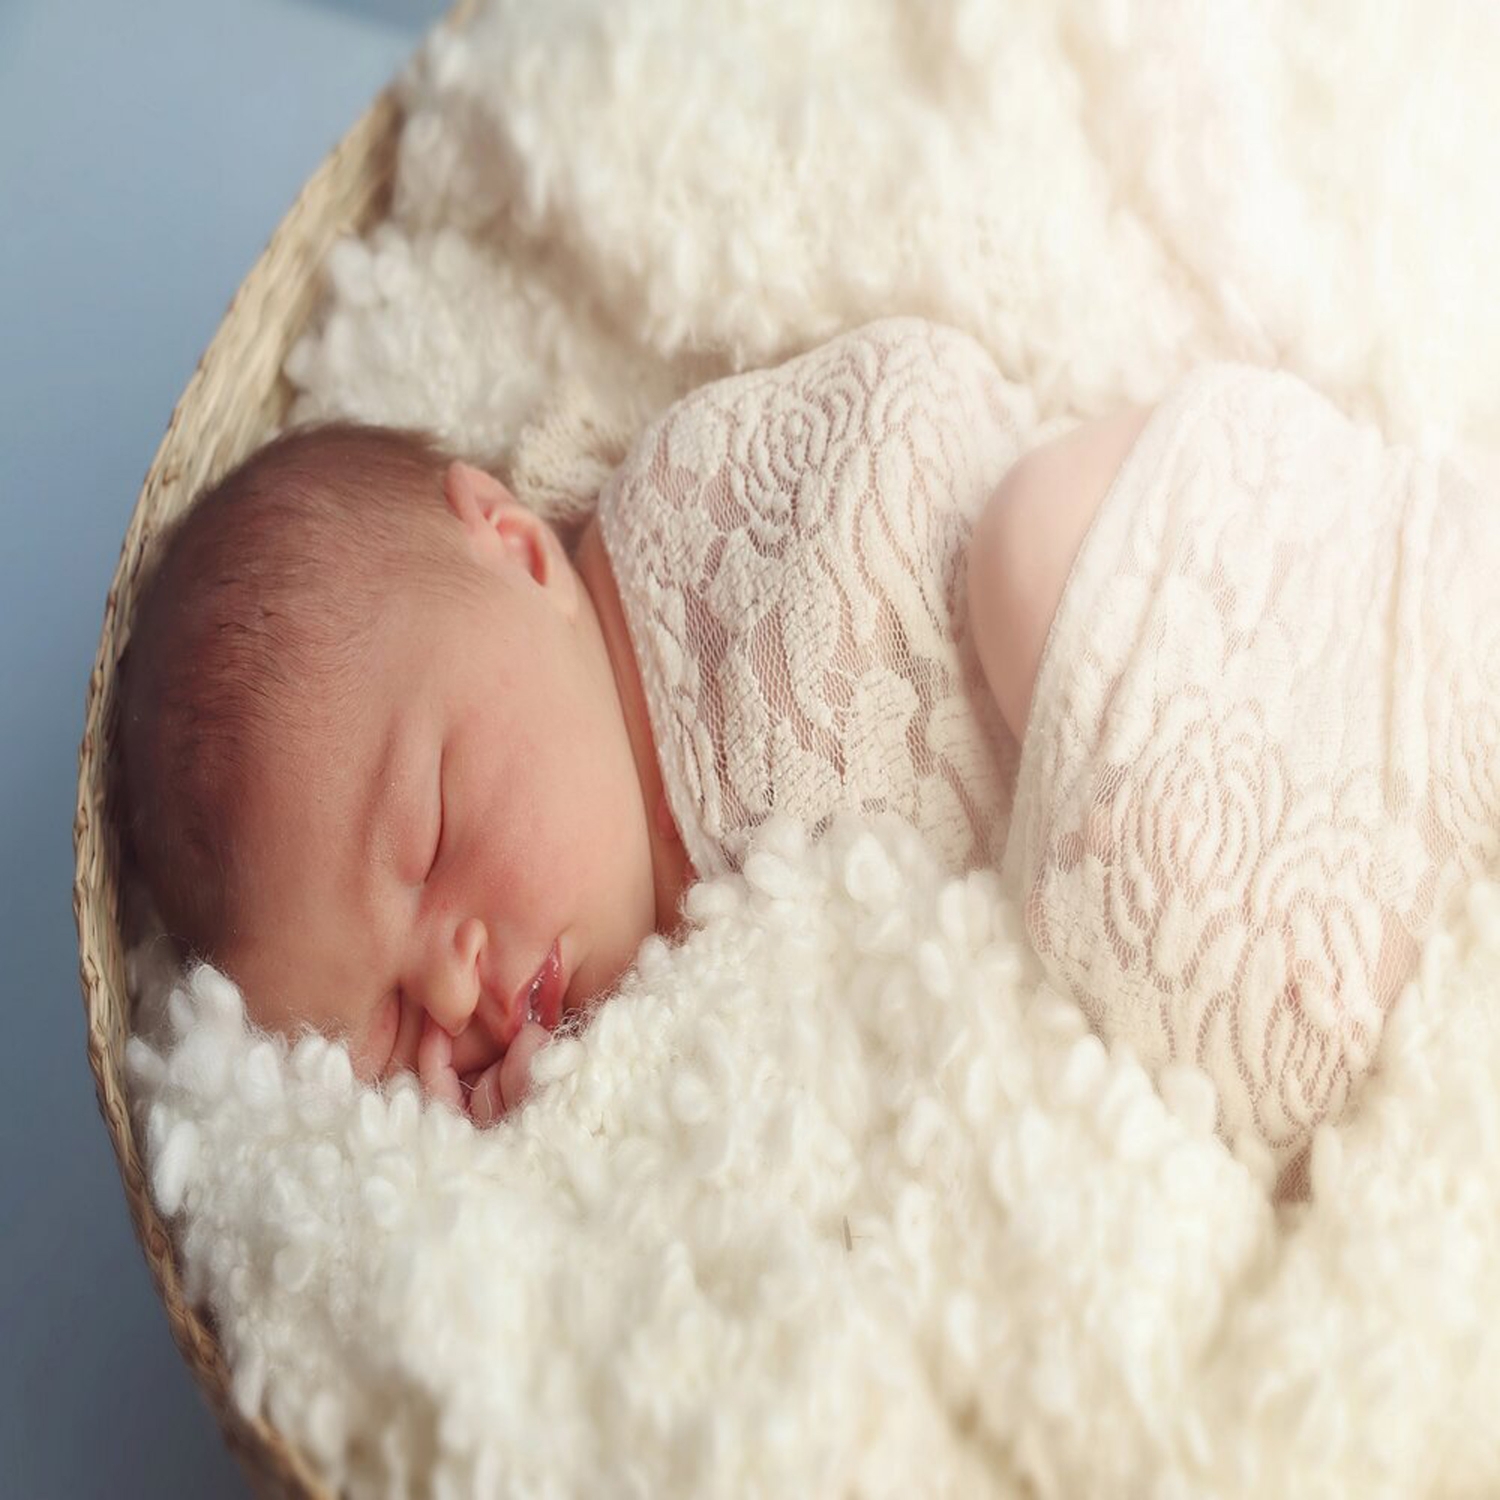 18 Baby Sleep Rain Sounds - Natural Rain Sounds for Baby Sleep